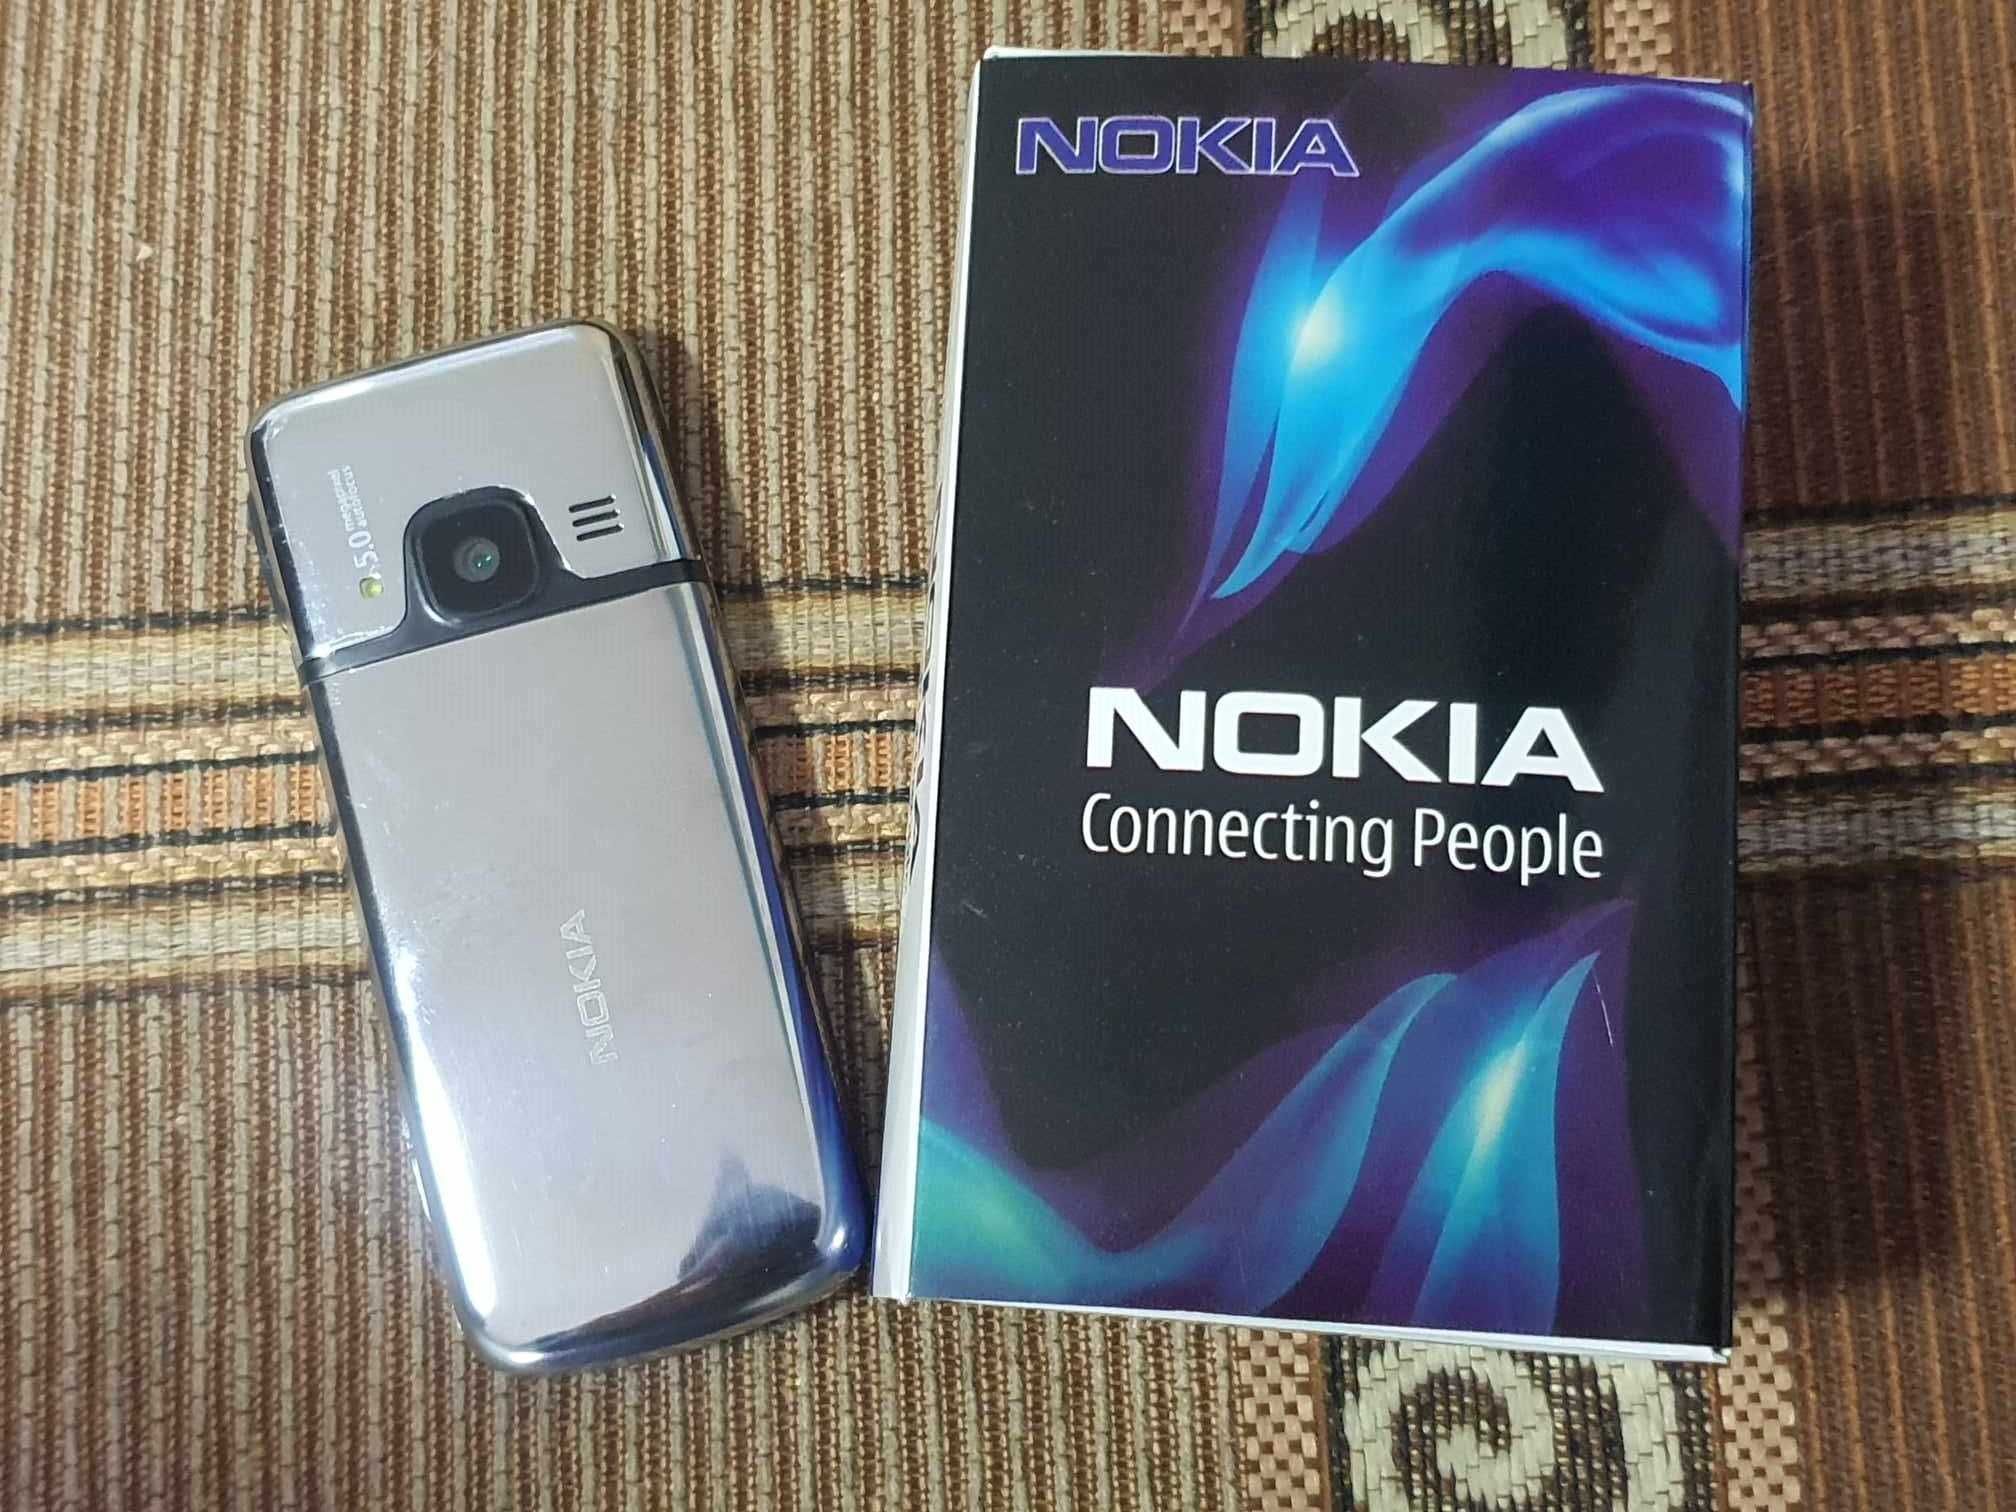 vand Nokia 6700 in stare impecabila ca- Nou !!